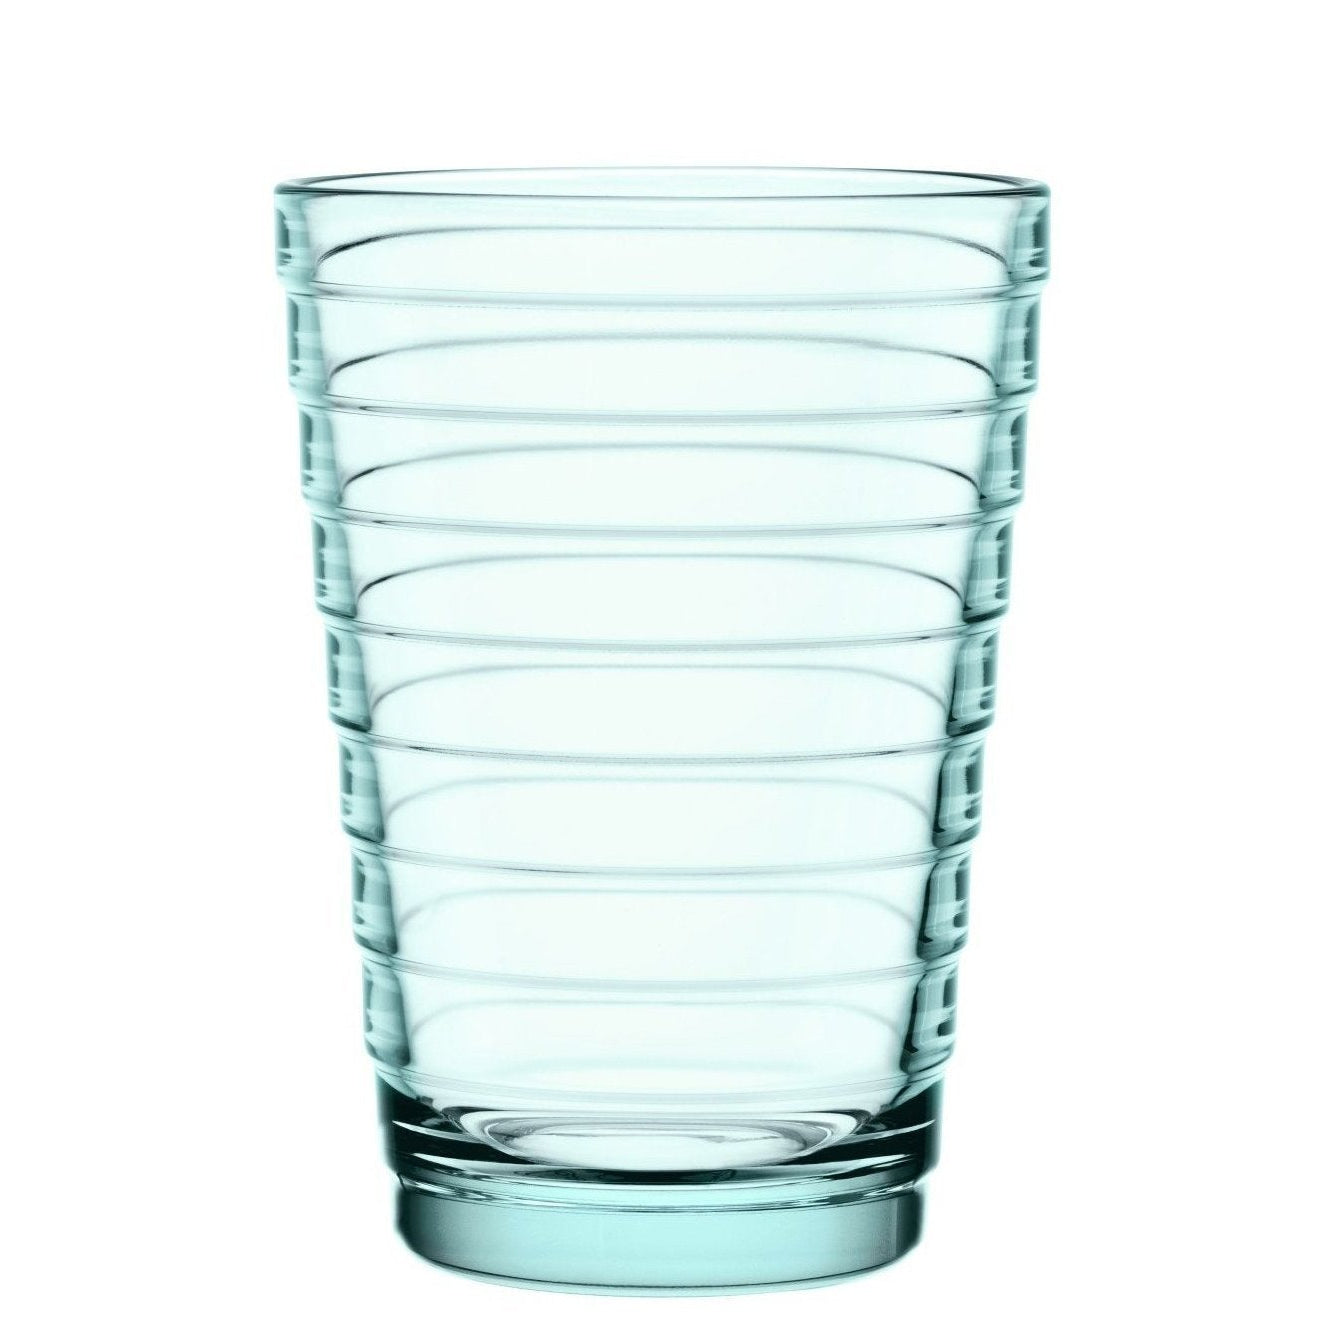 Iittala Aino Aalto Gläser Wasser Grün 2Stück, 33cl